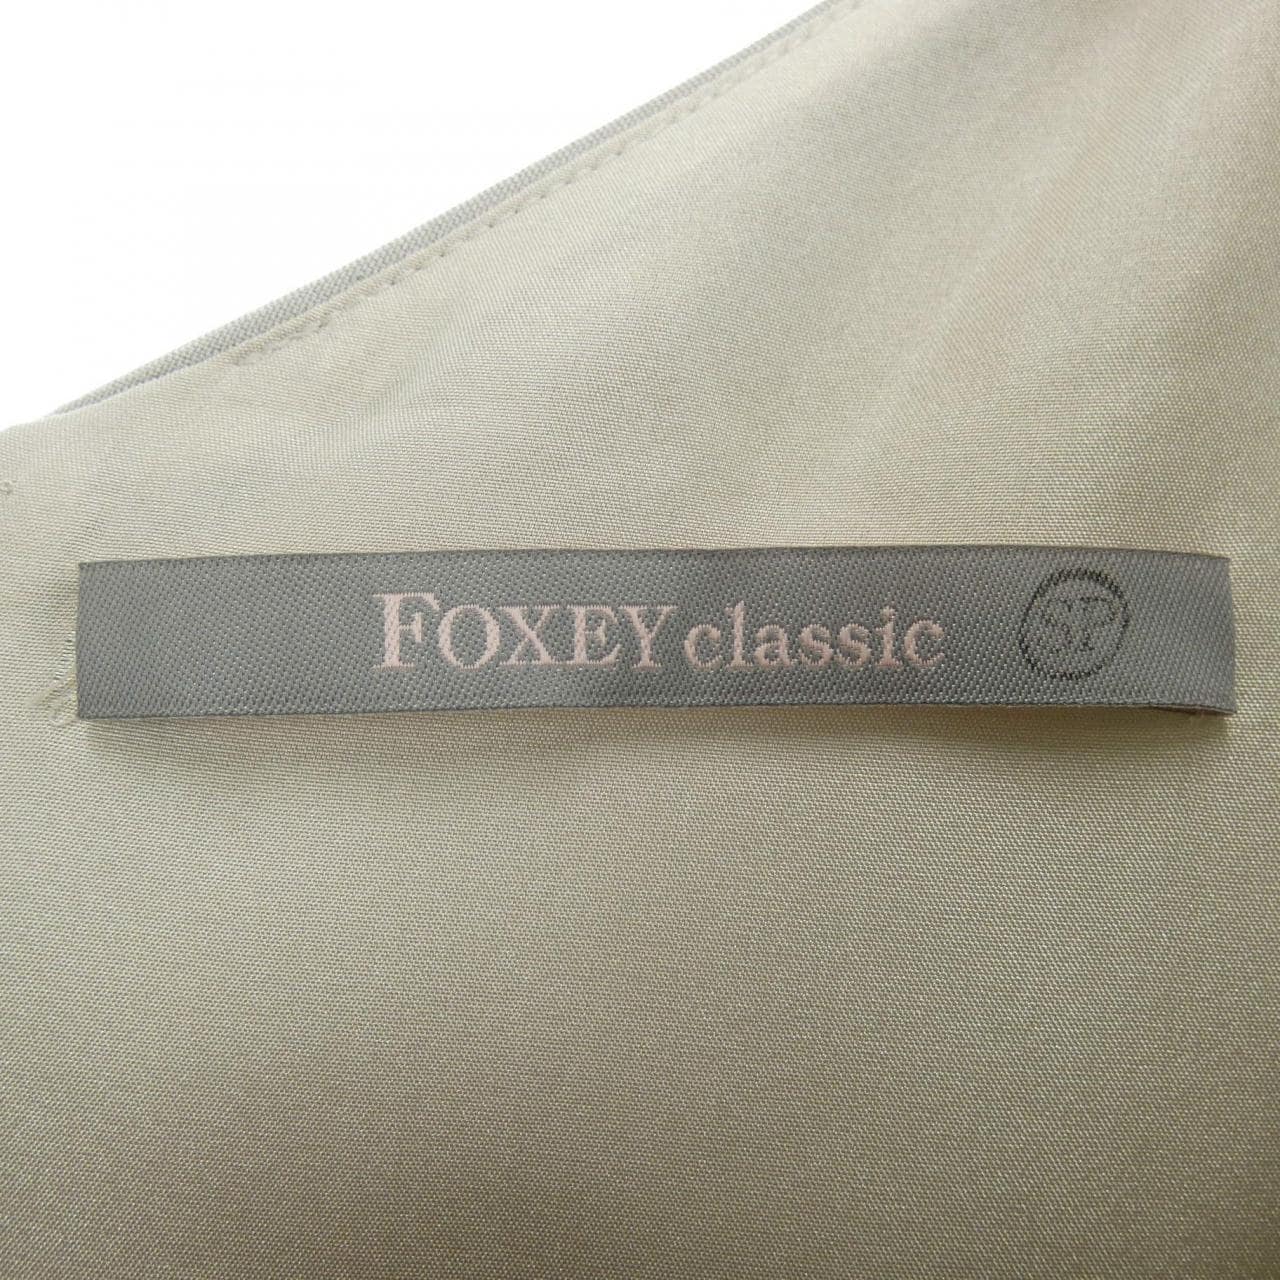 FOXEY CLASSIC FOXEY CLASSIC ワンピース